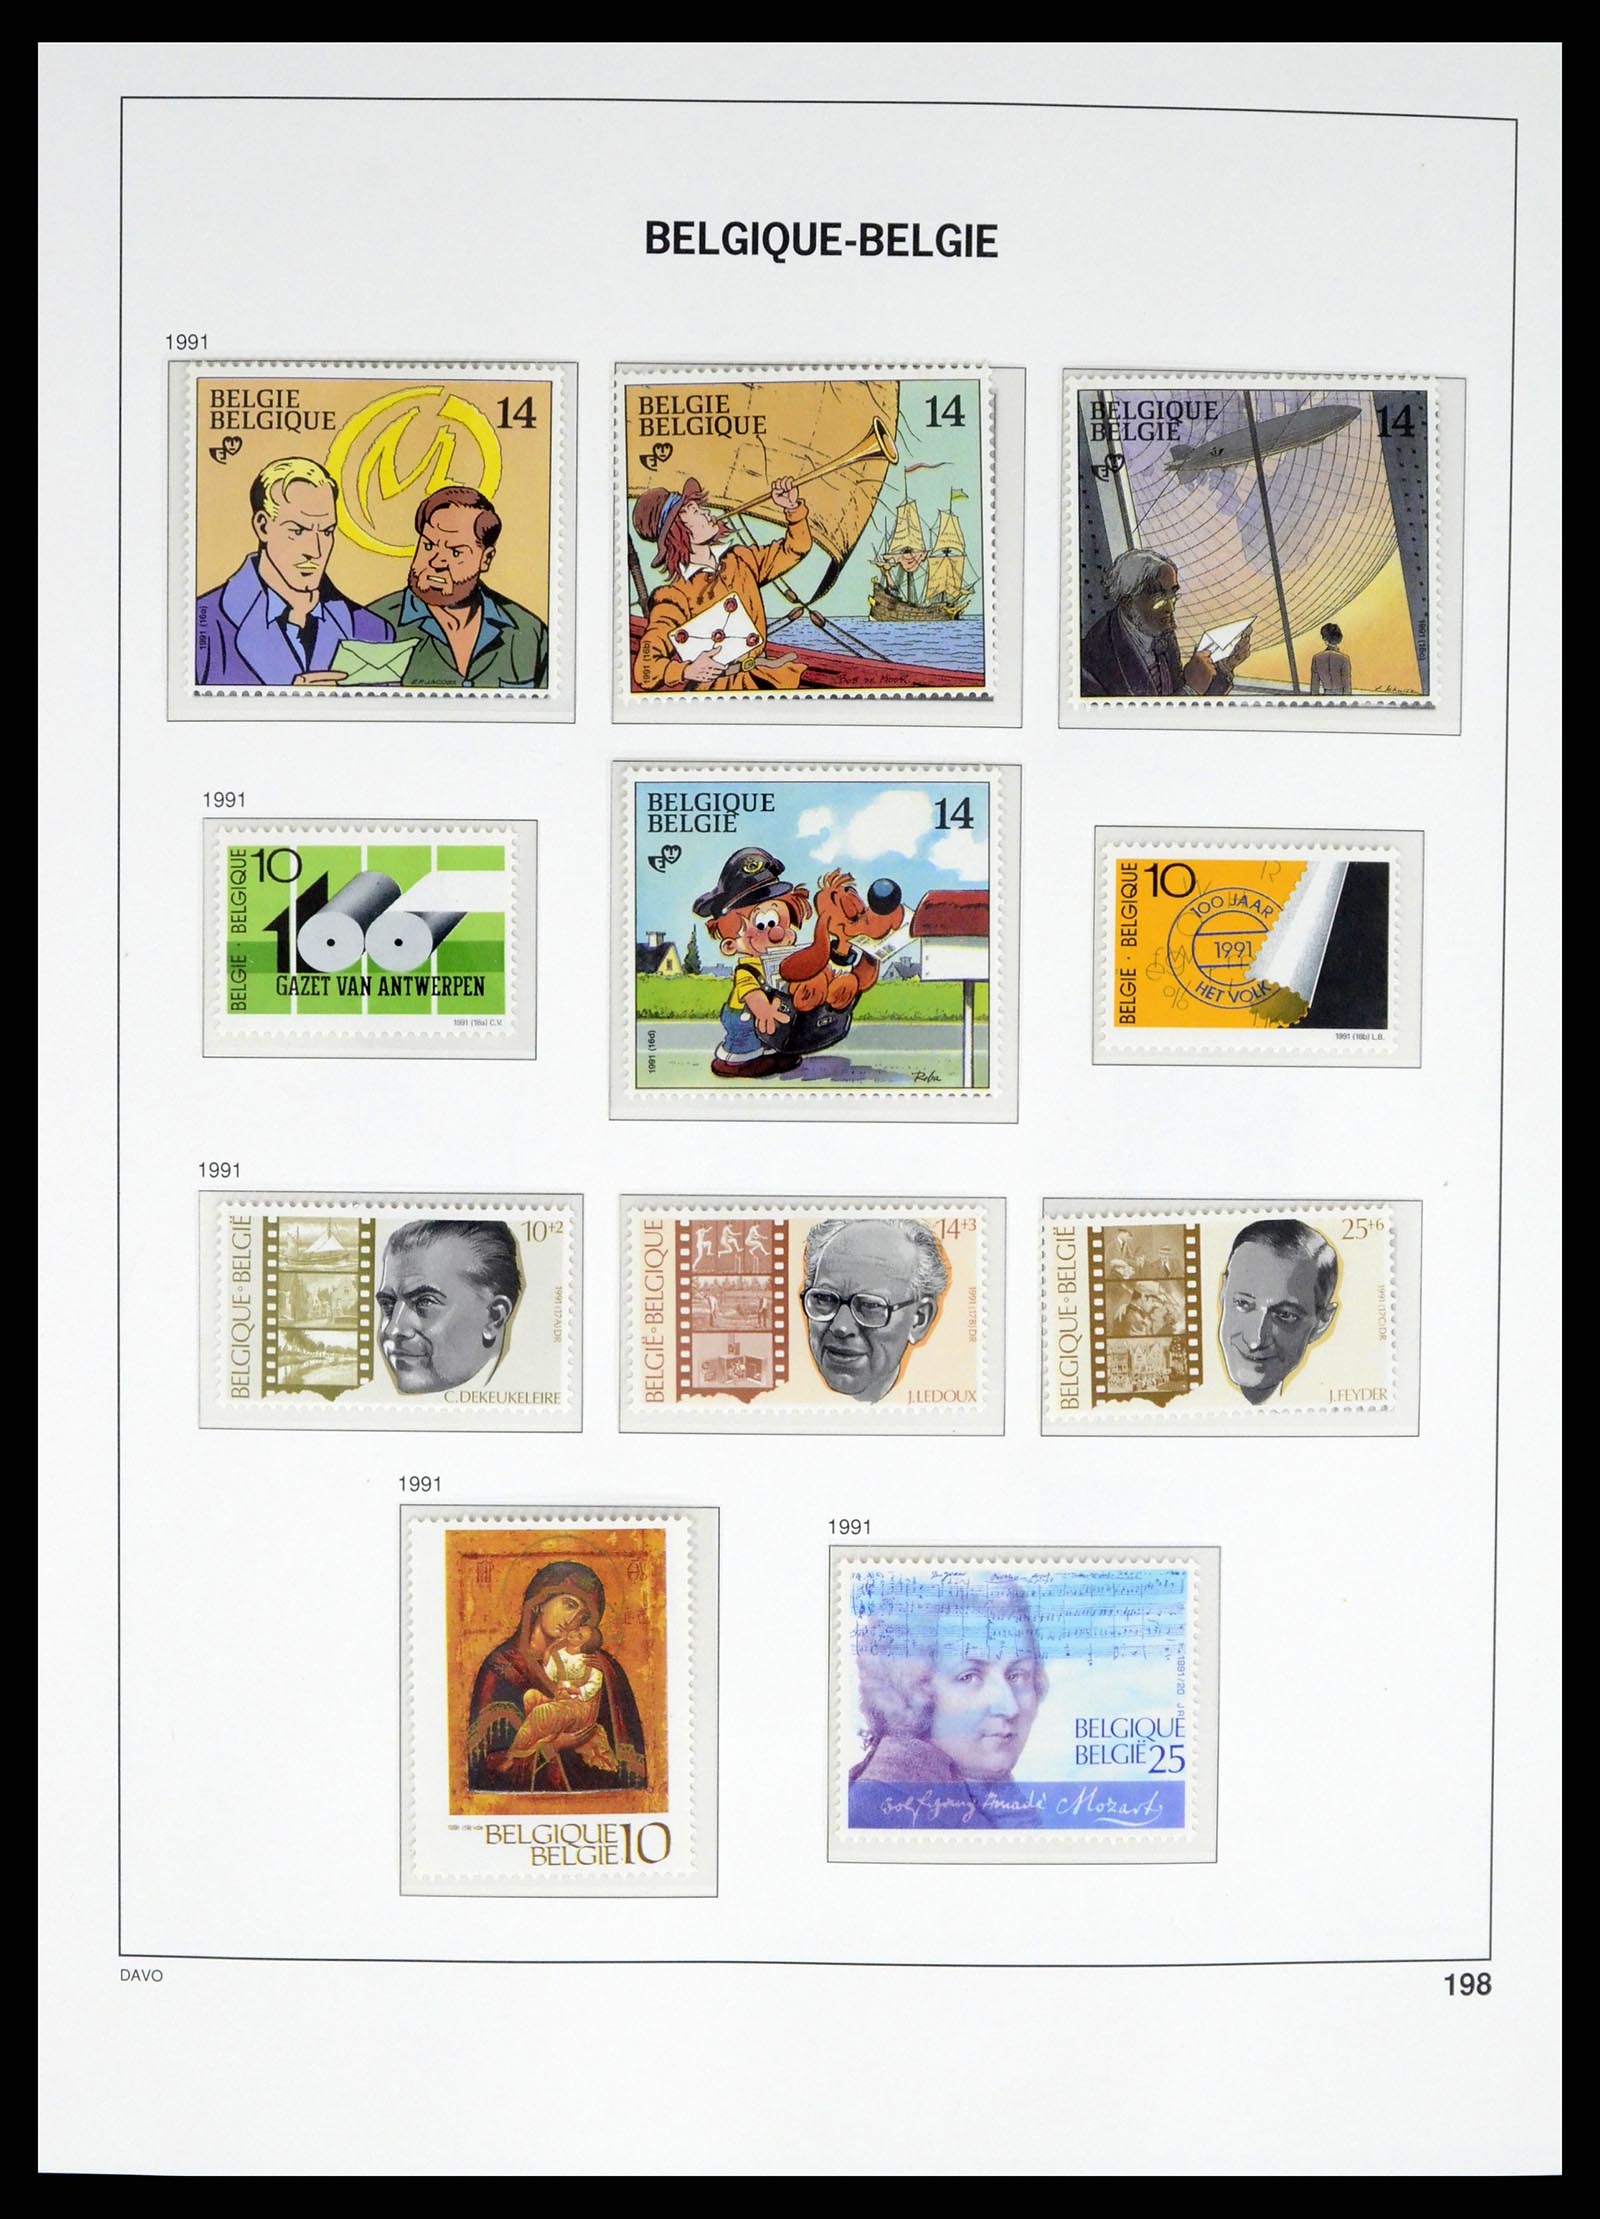 37368 099 - Stamp collection 37368 Belgium 1969-2003.